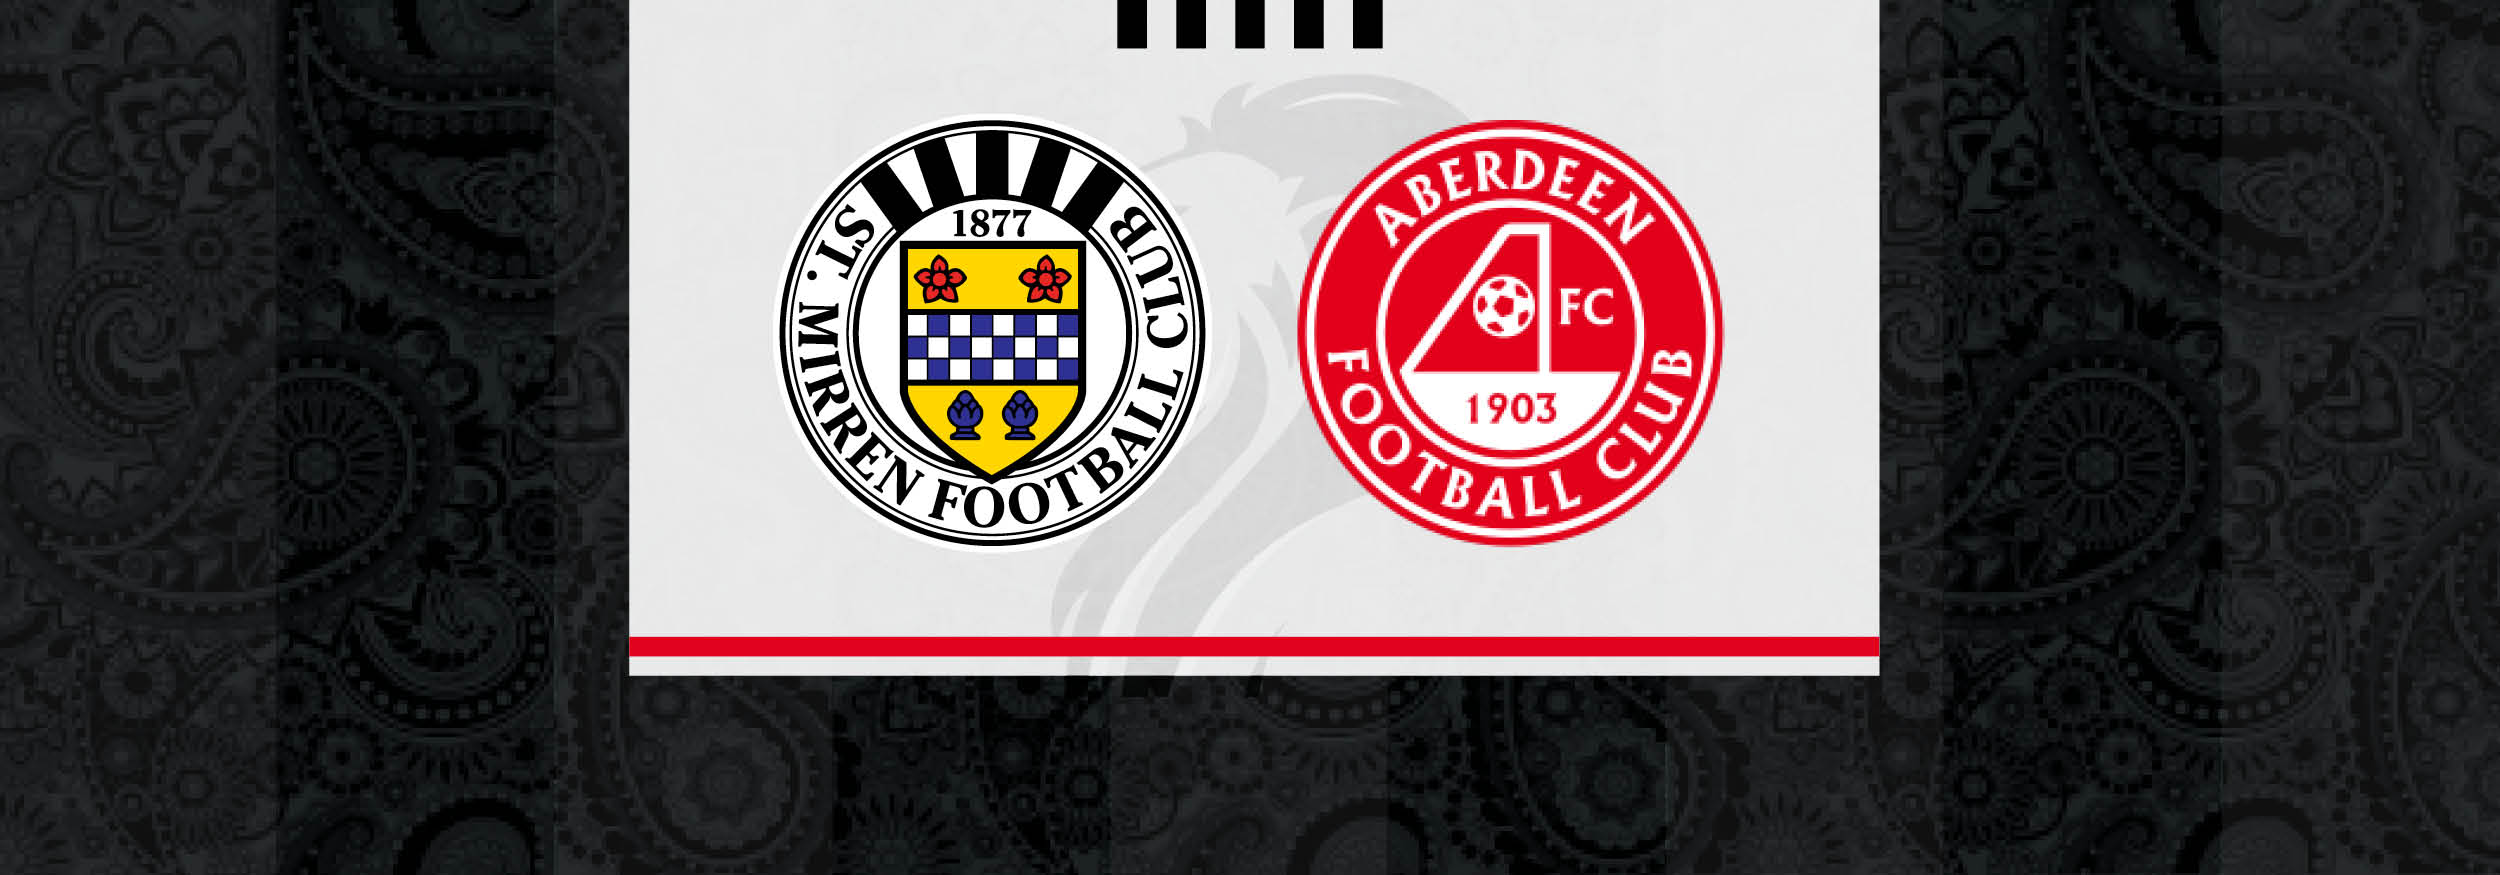 Matchday Info: St Mirren v Aberdeen (24th Dec)